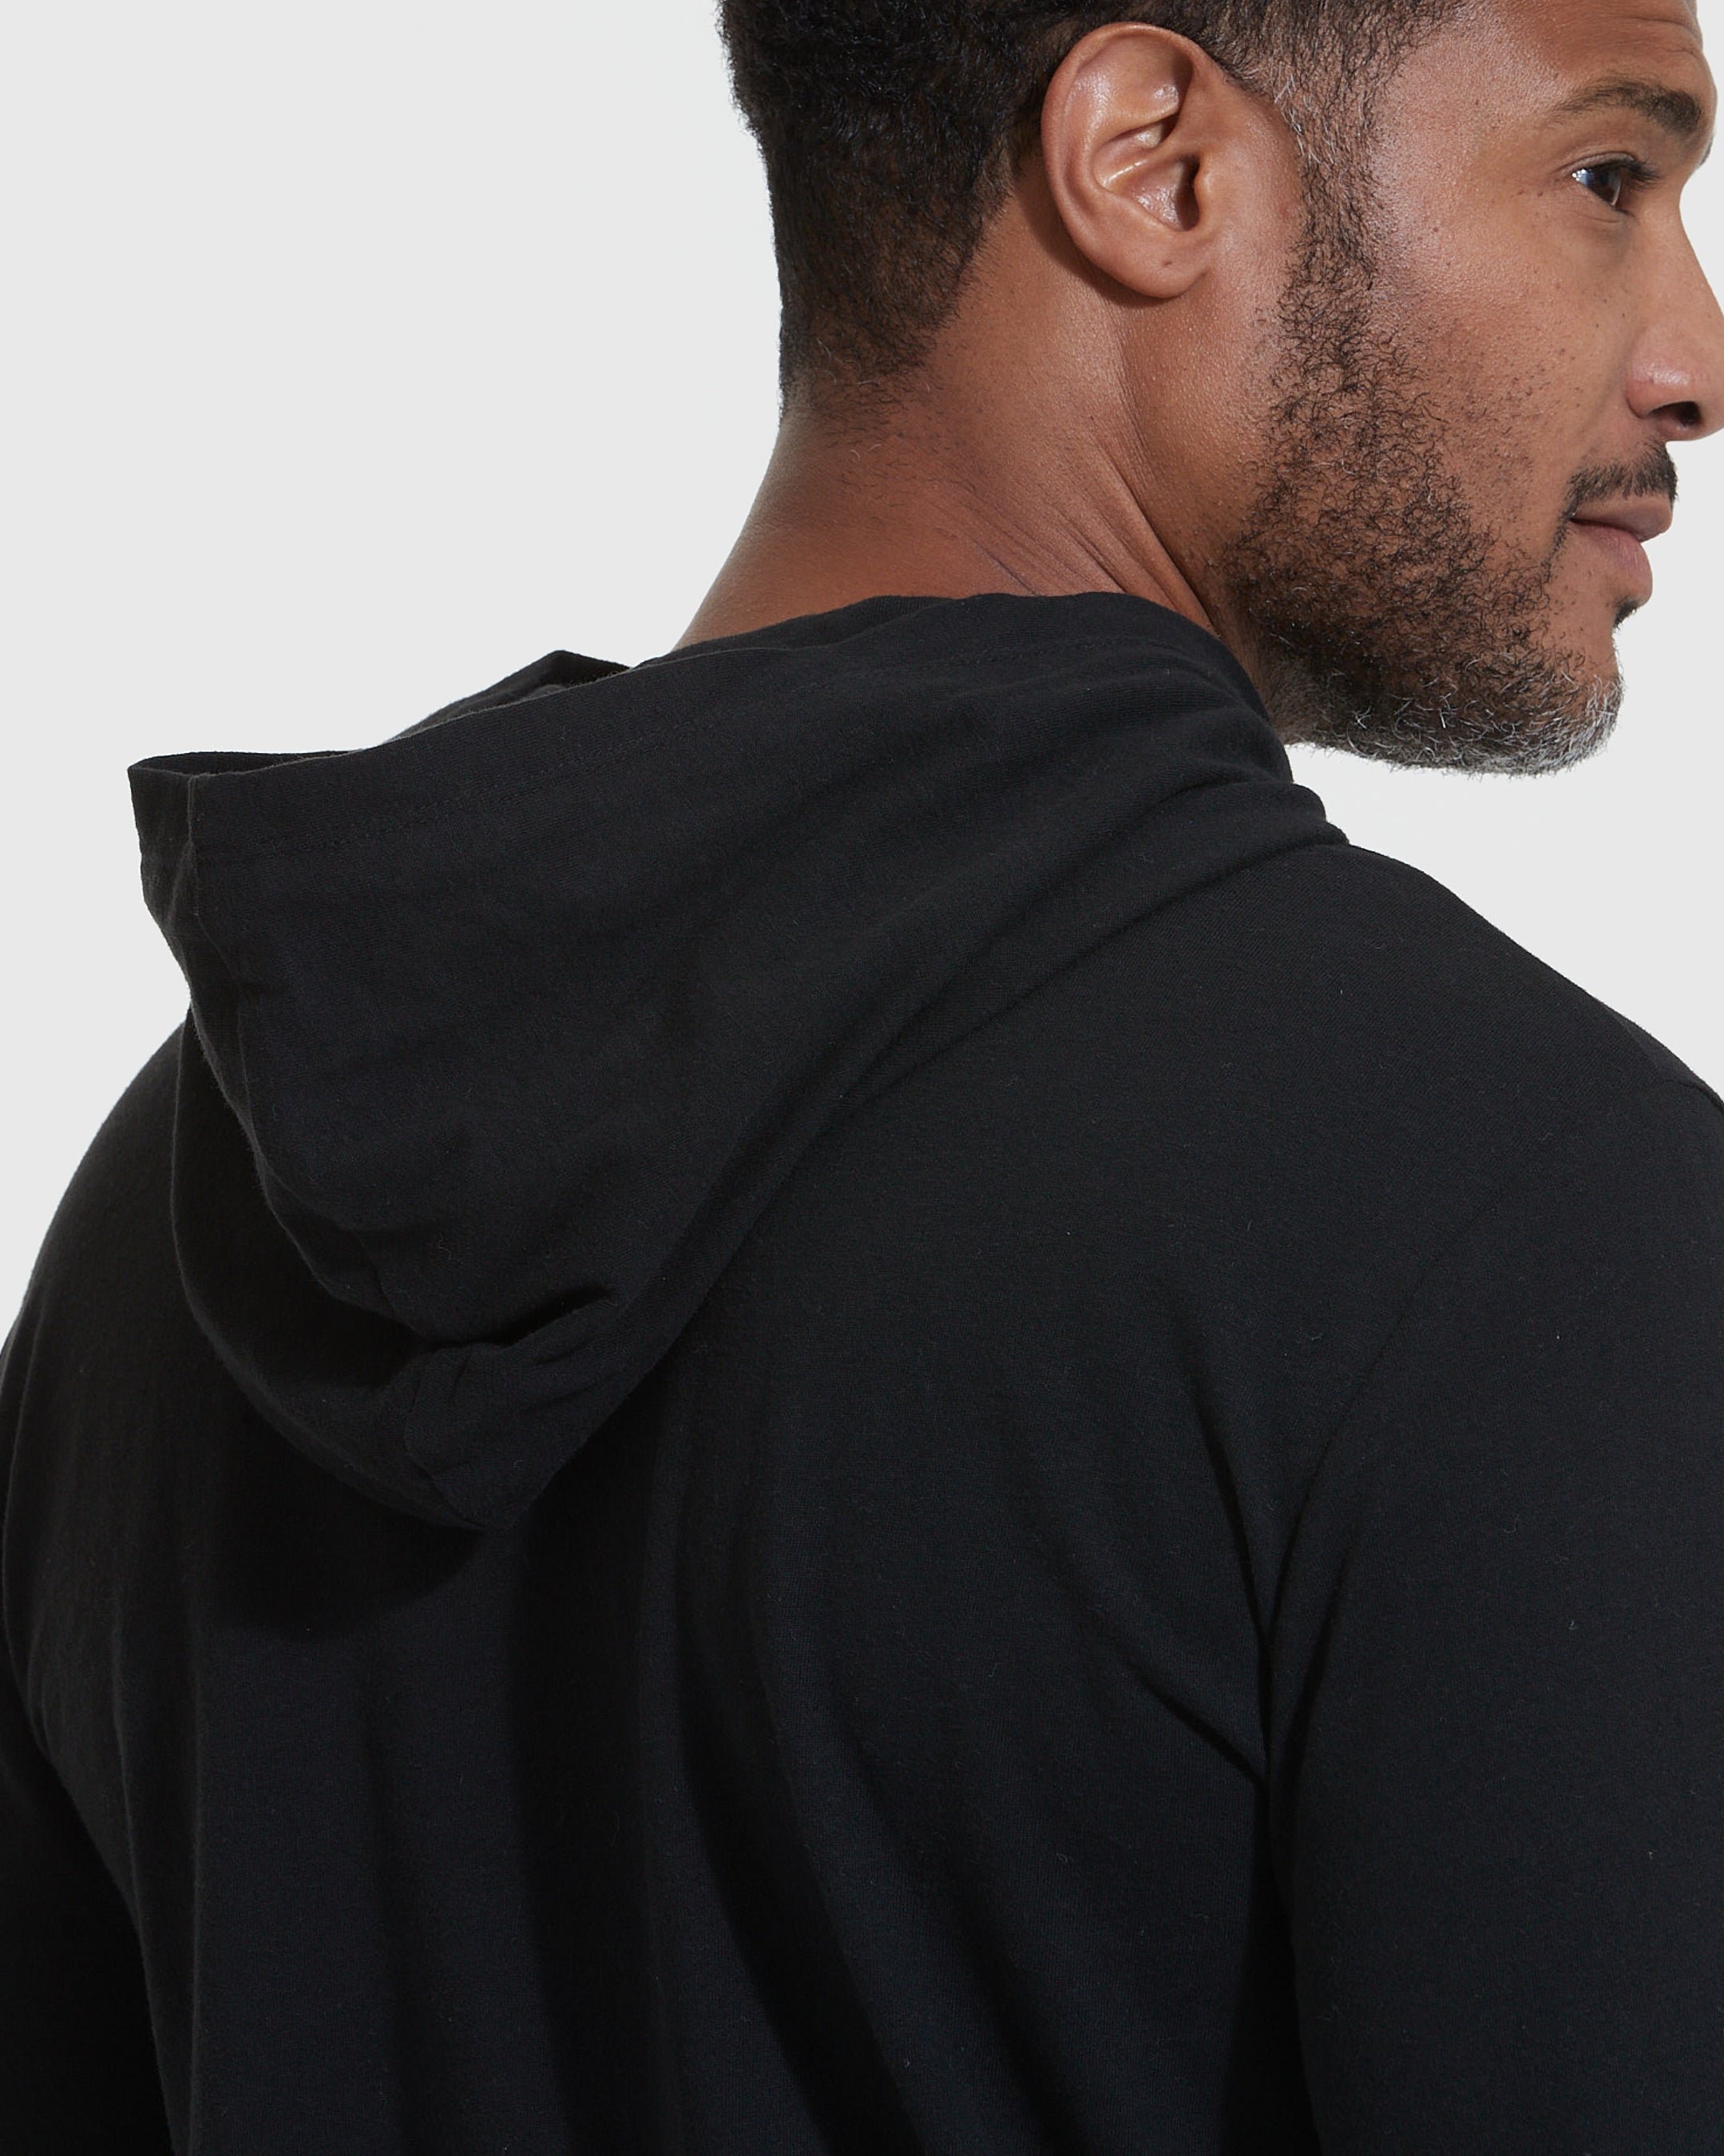 Black Hooded Long Sleeve T-Shirt